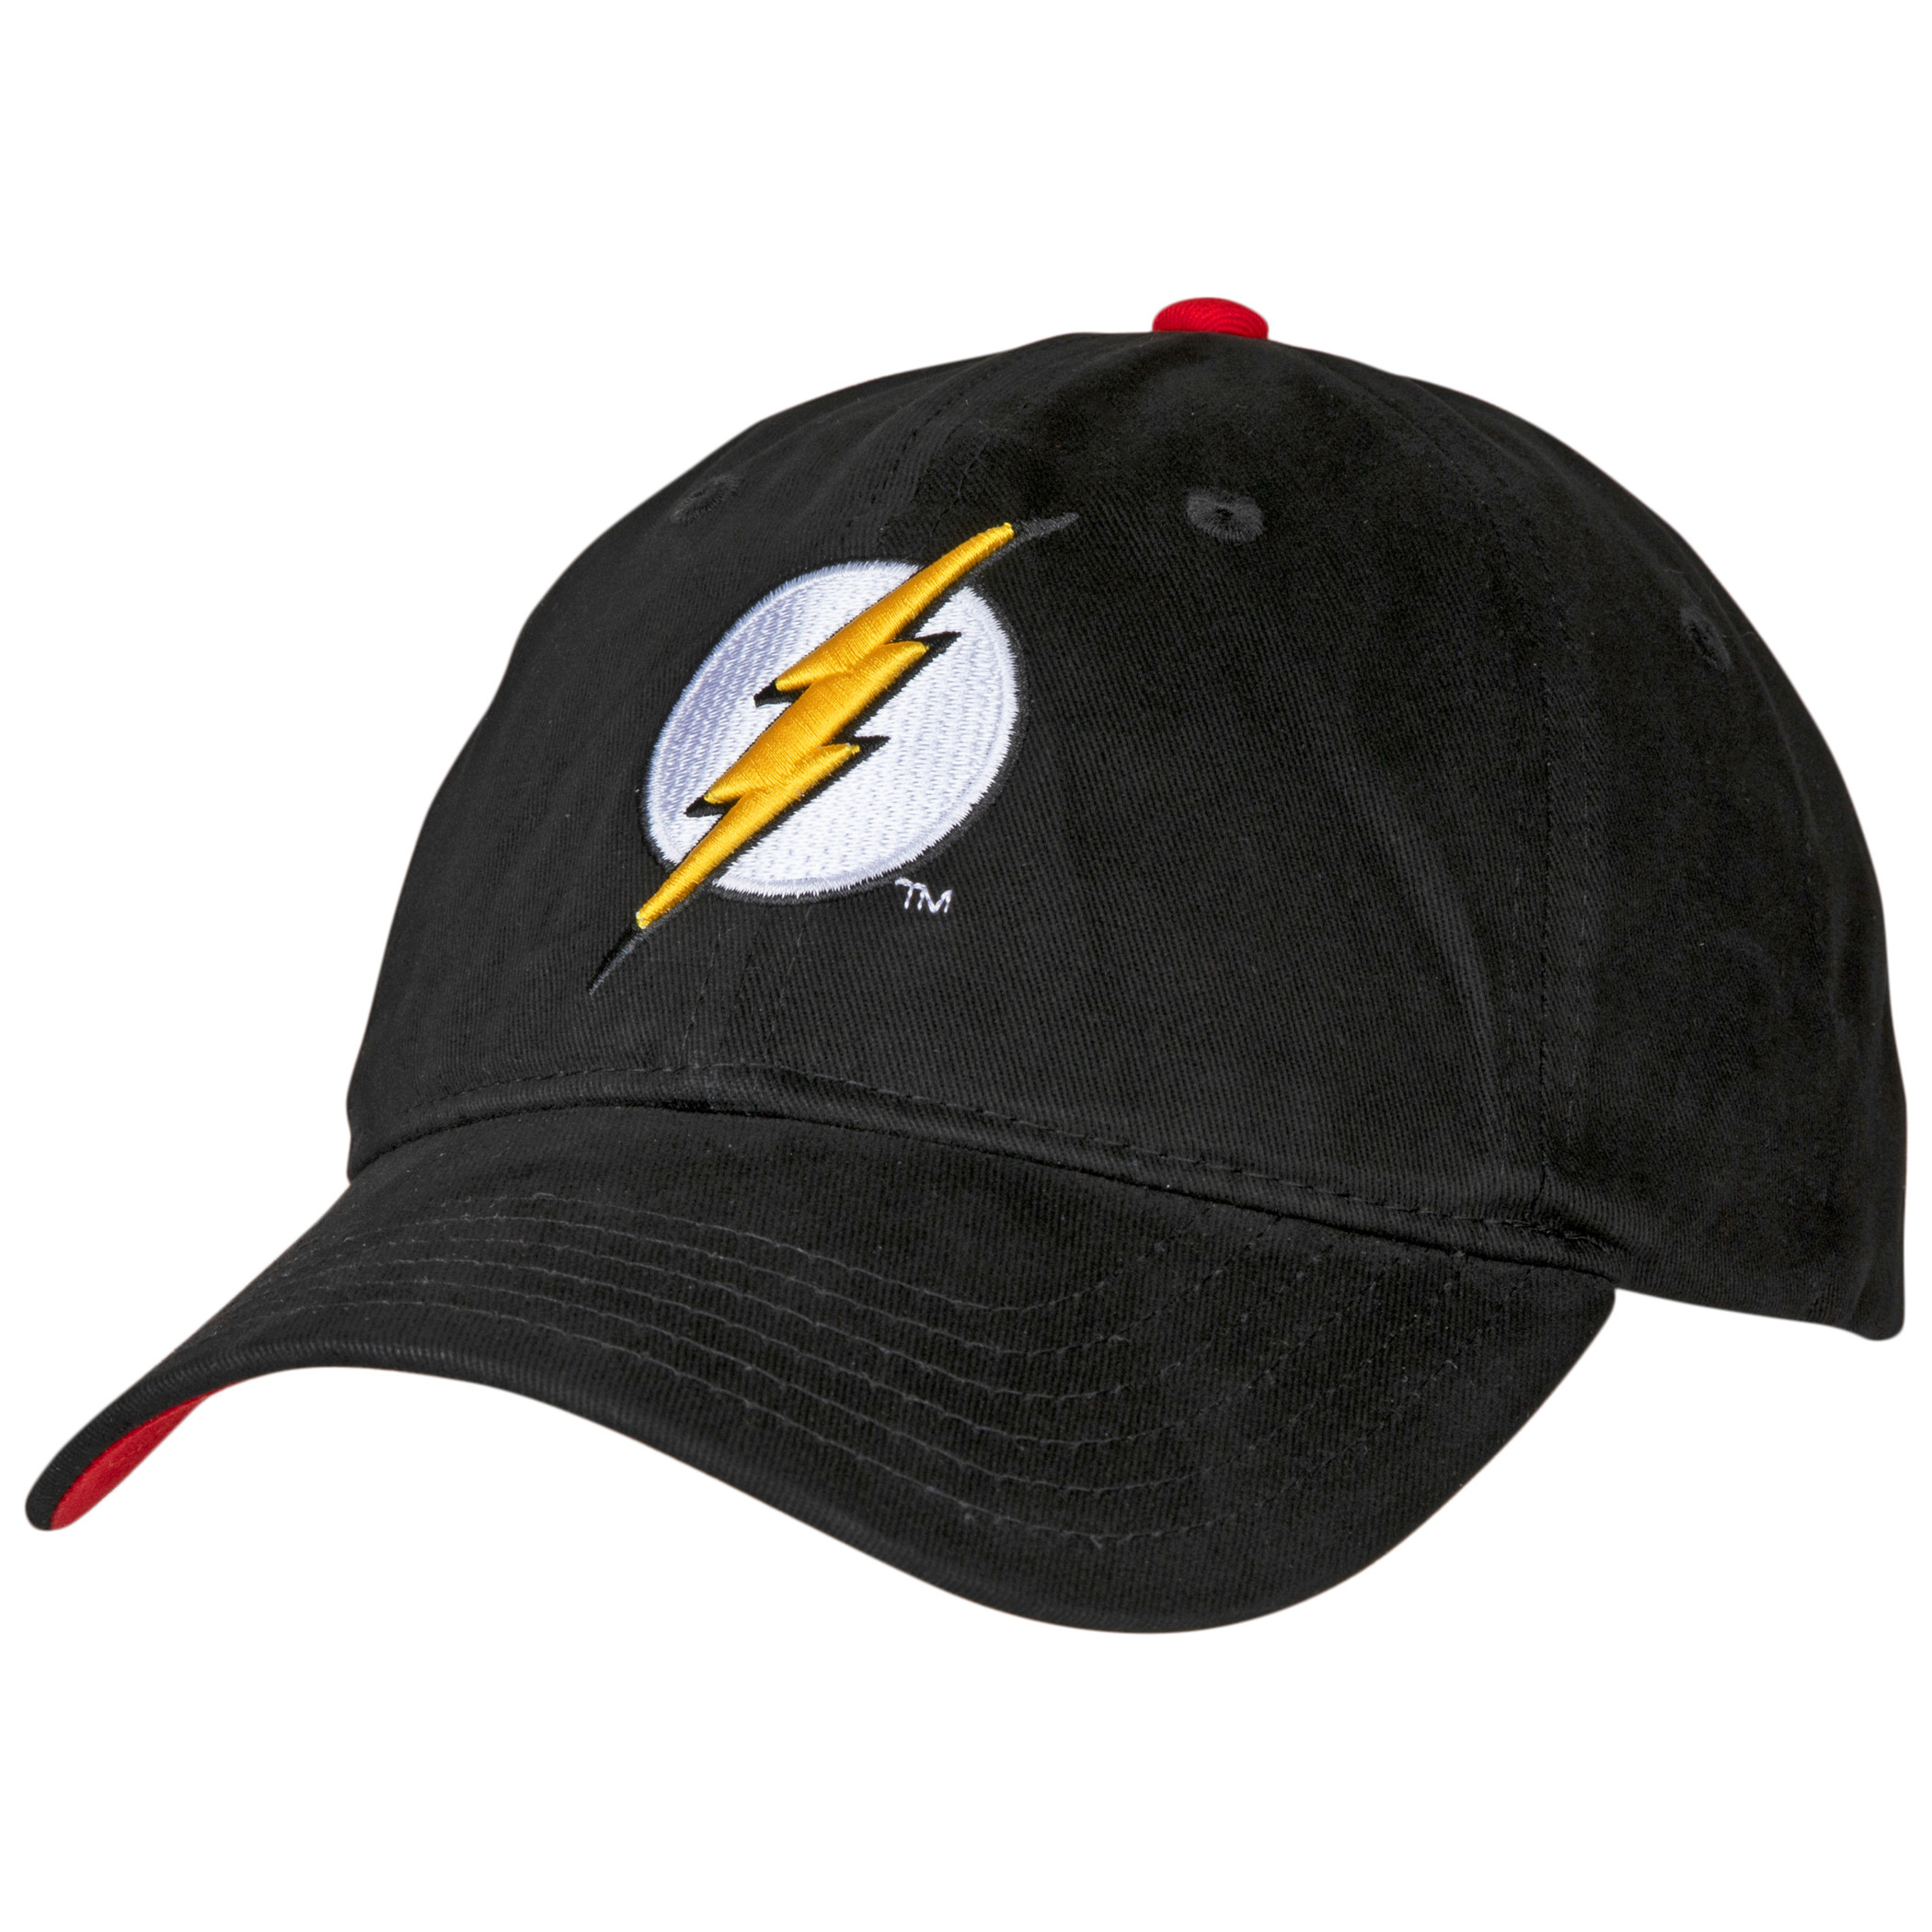 The Flash Classic Symbol Curved Brim Adjustable Dad Hat